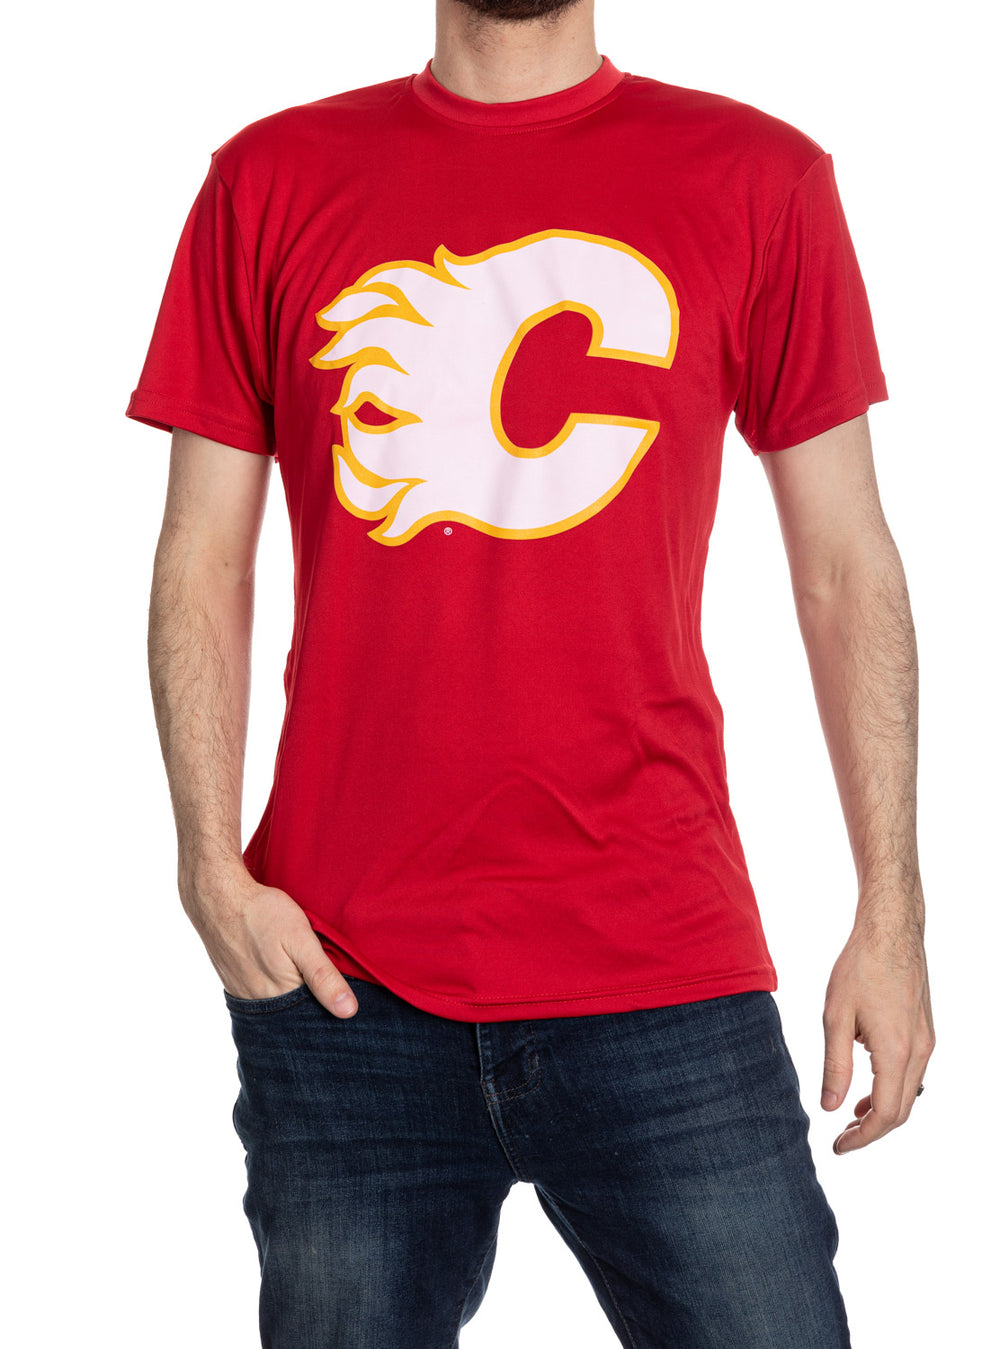 Calgary Flames Premium Apparel and Leisurewear